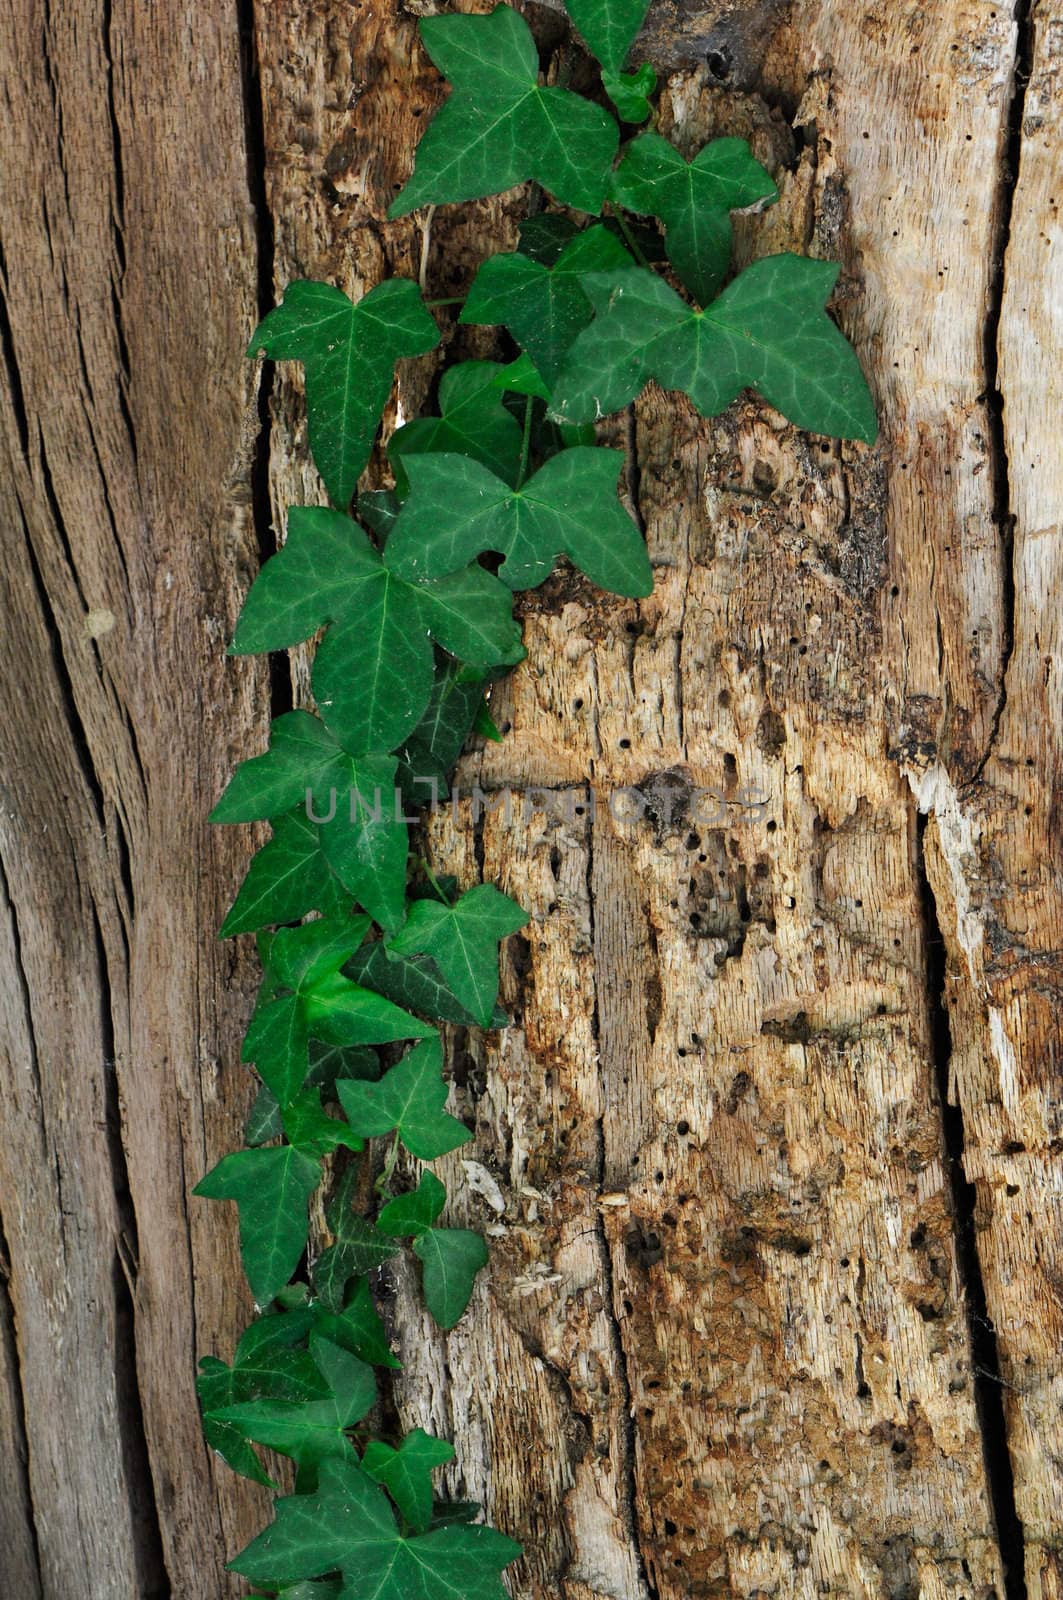 Green ivy clumbing on a trunc by shkyo30